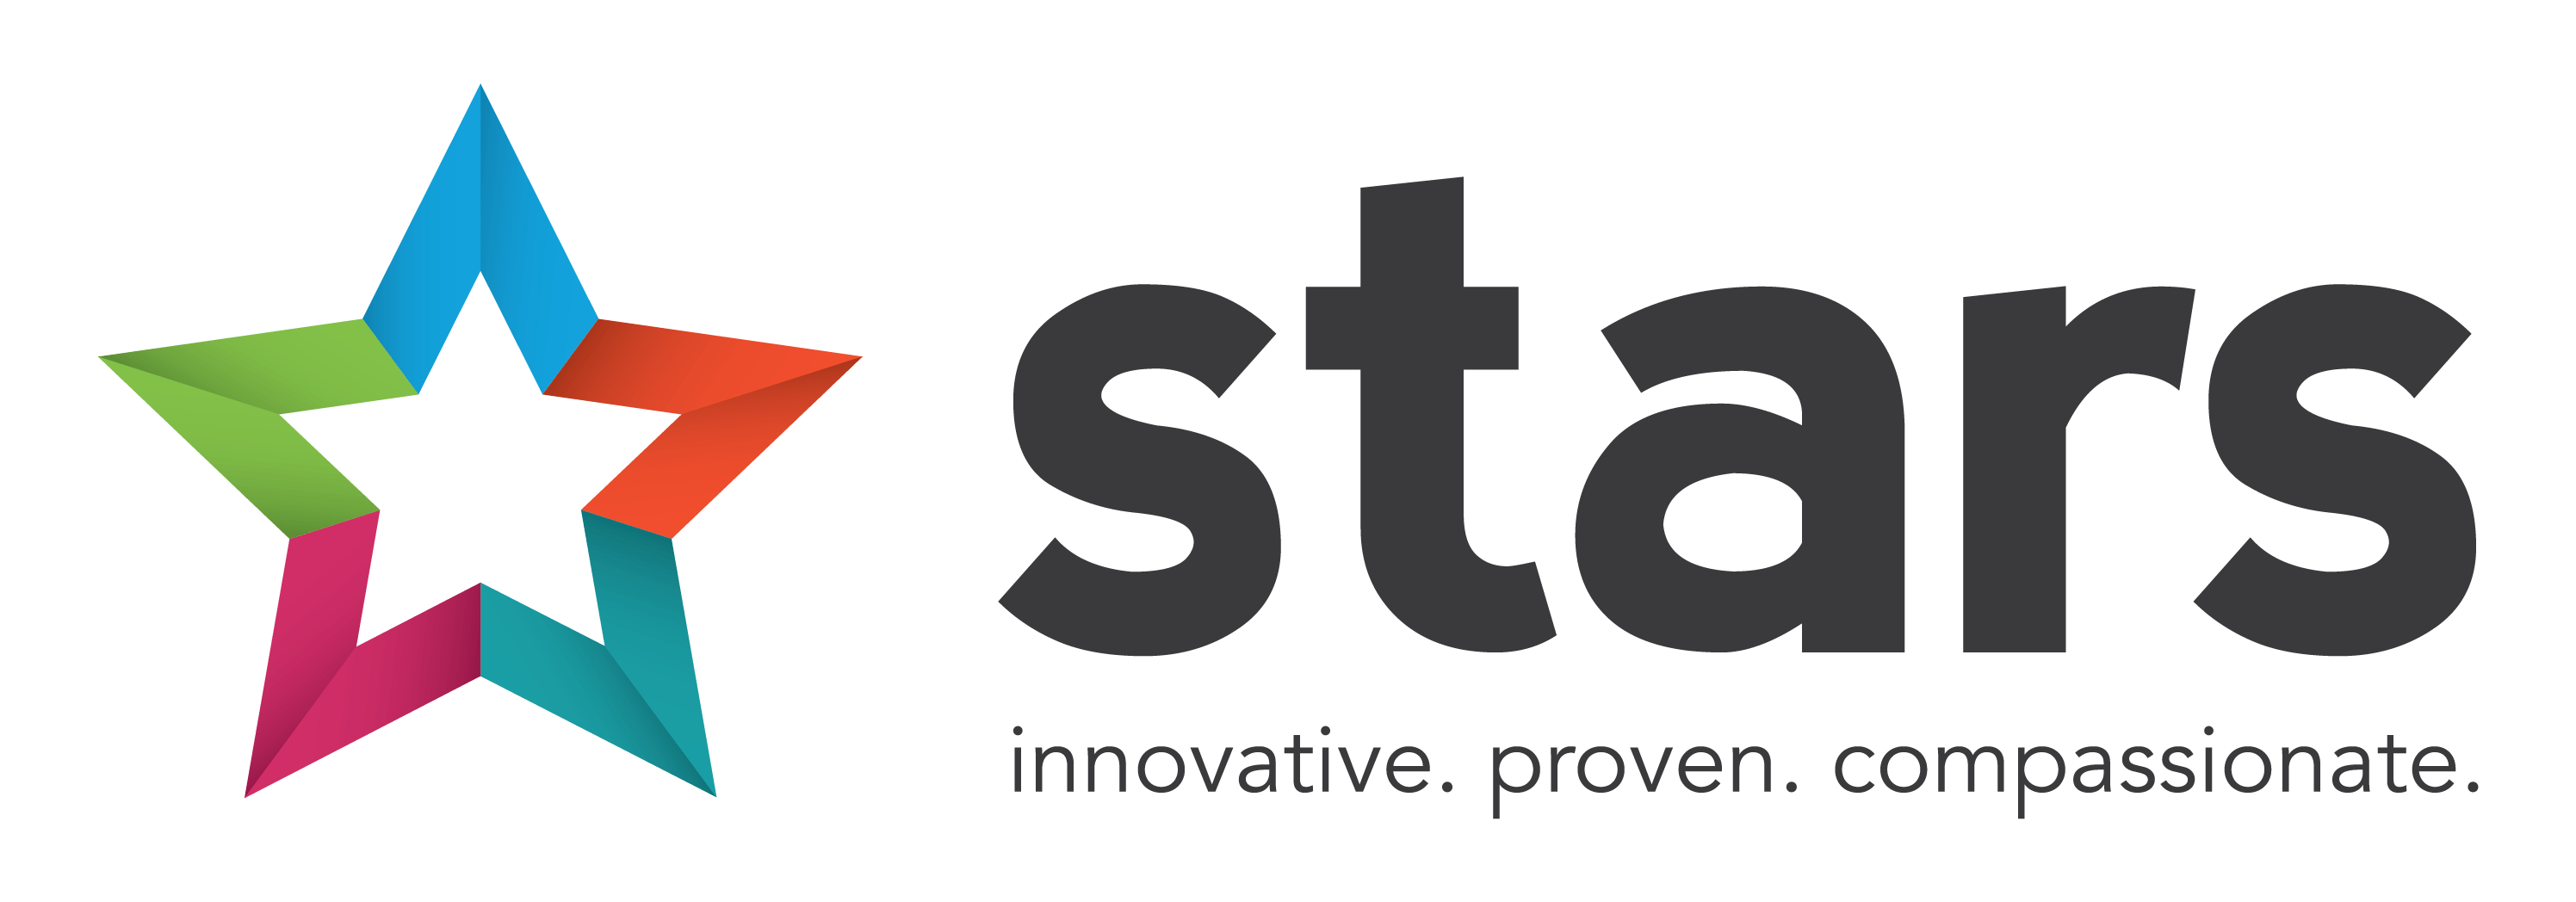 Stars Logo - About